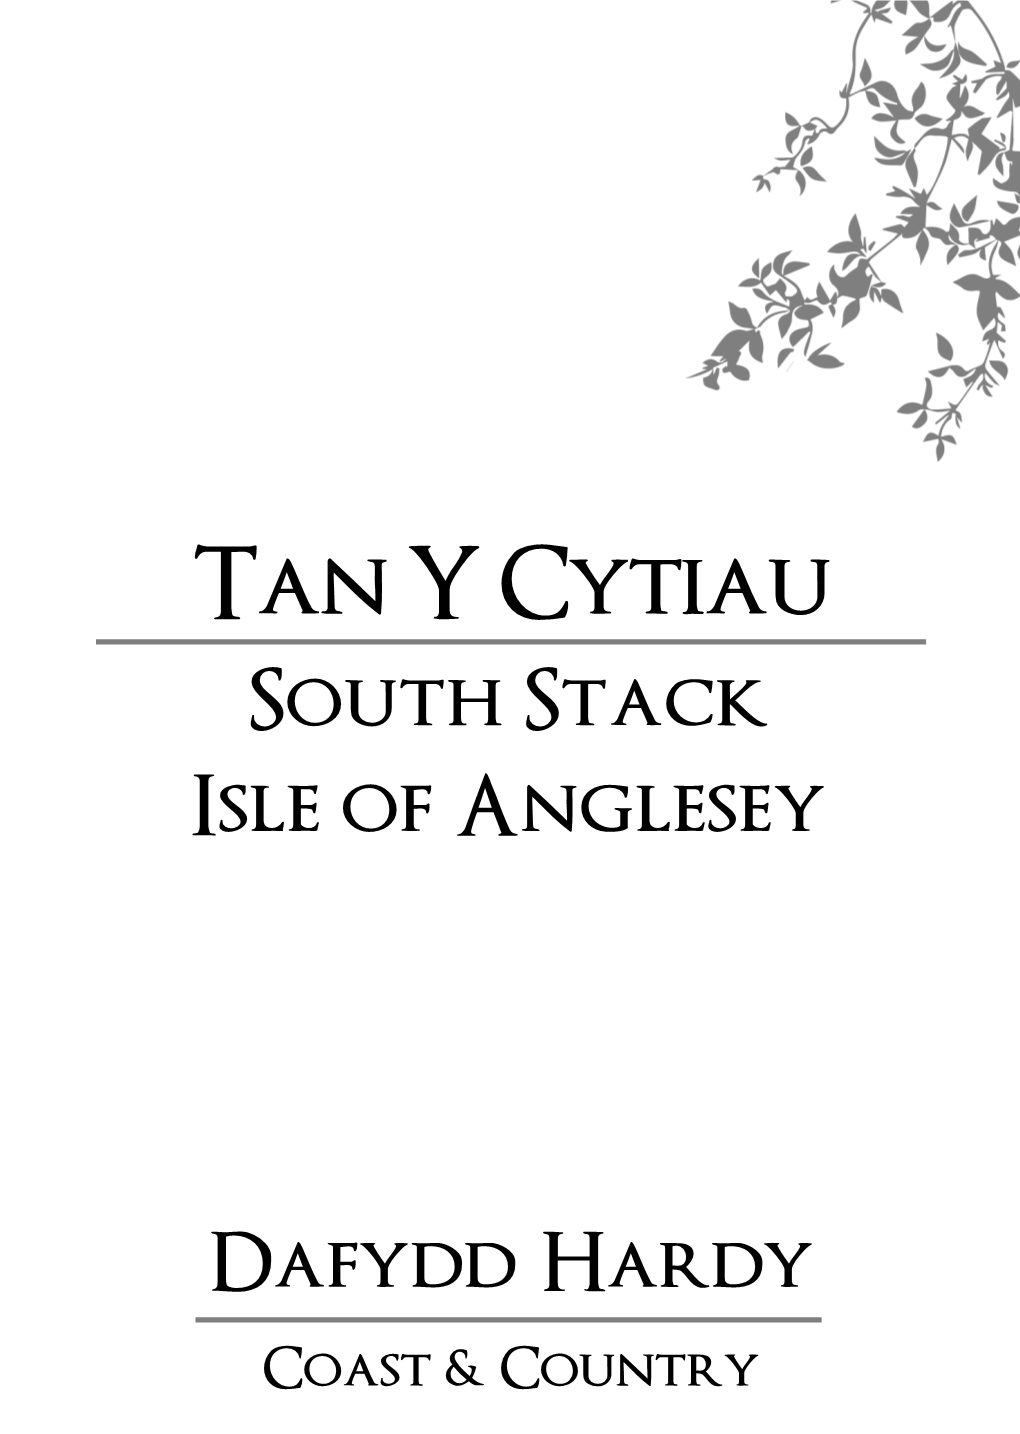 Tan Y Cytiau South Stack Isle of Anglesey